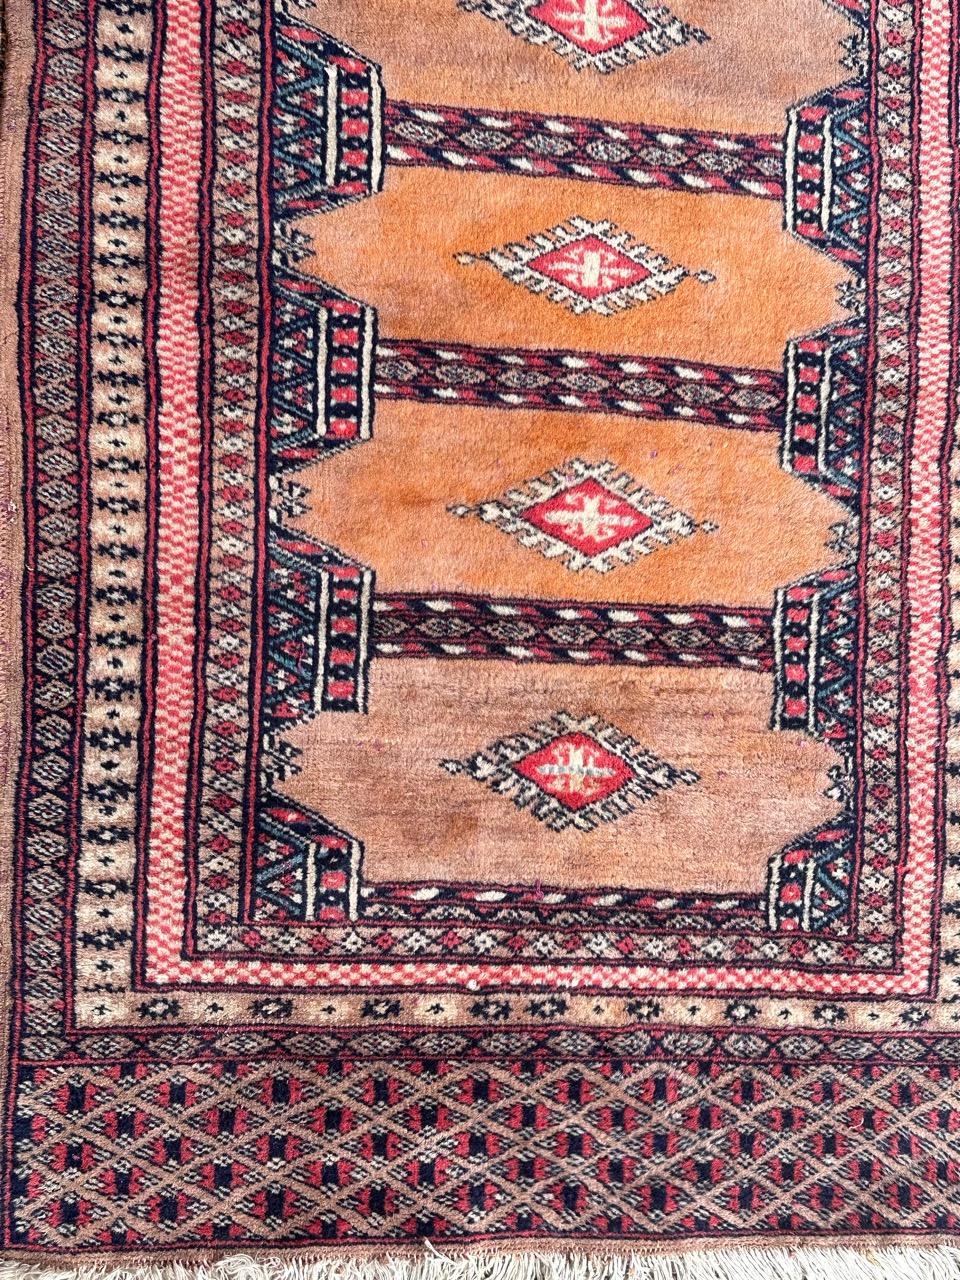 Wool Bobyrug’s pretty vintage Turkmen design Pakistani rug  For Sale